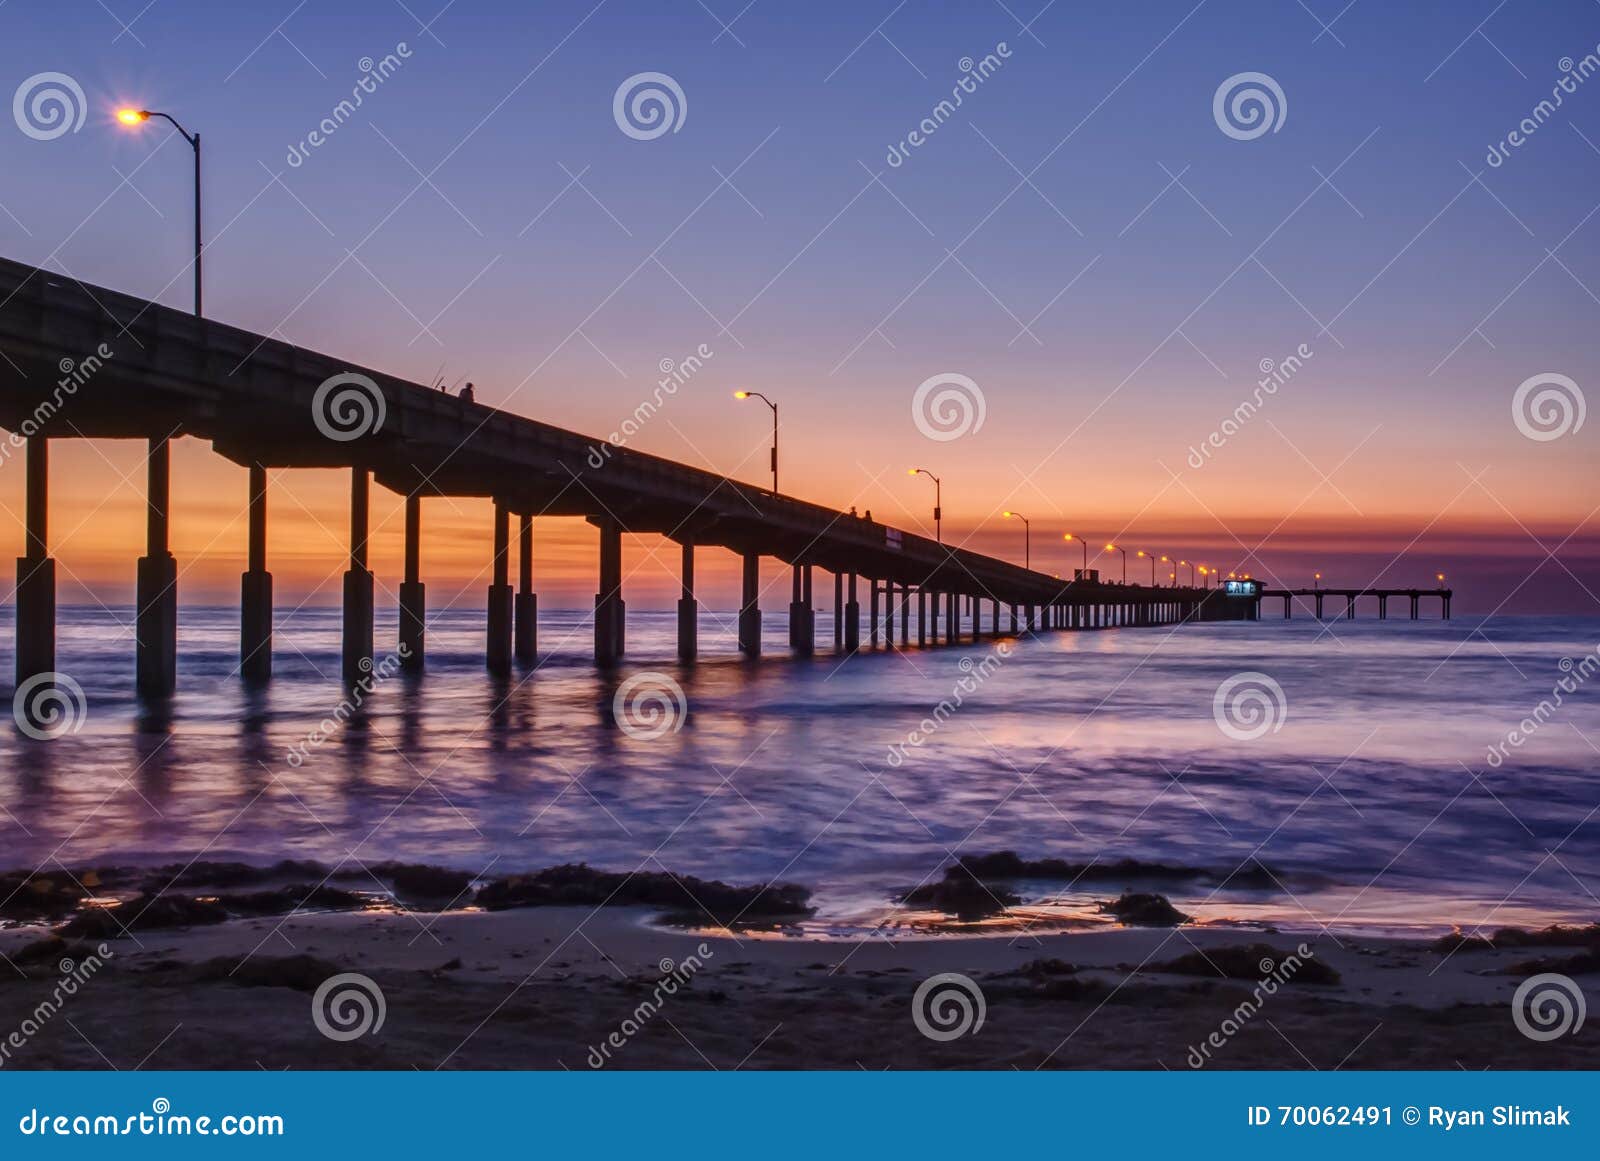 pier at ocean beach in san diego, california at sunset